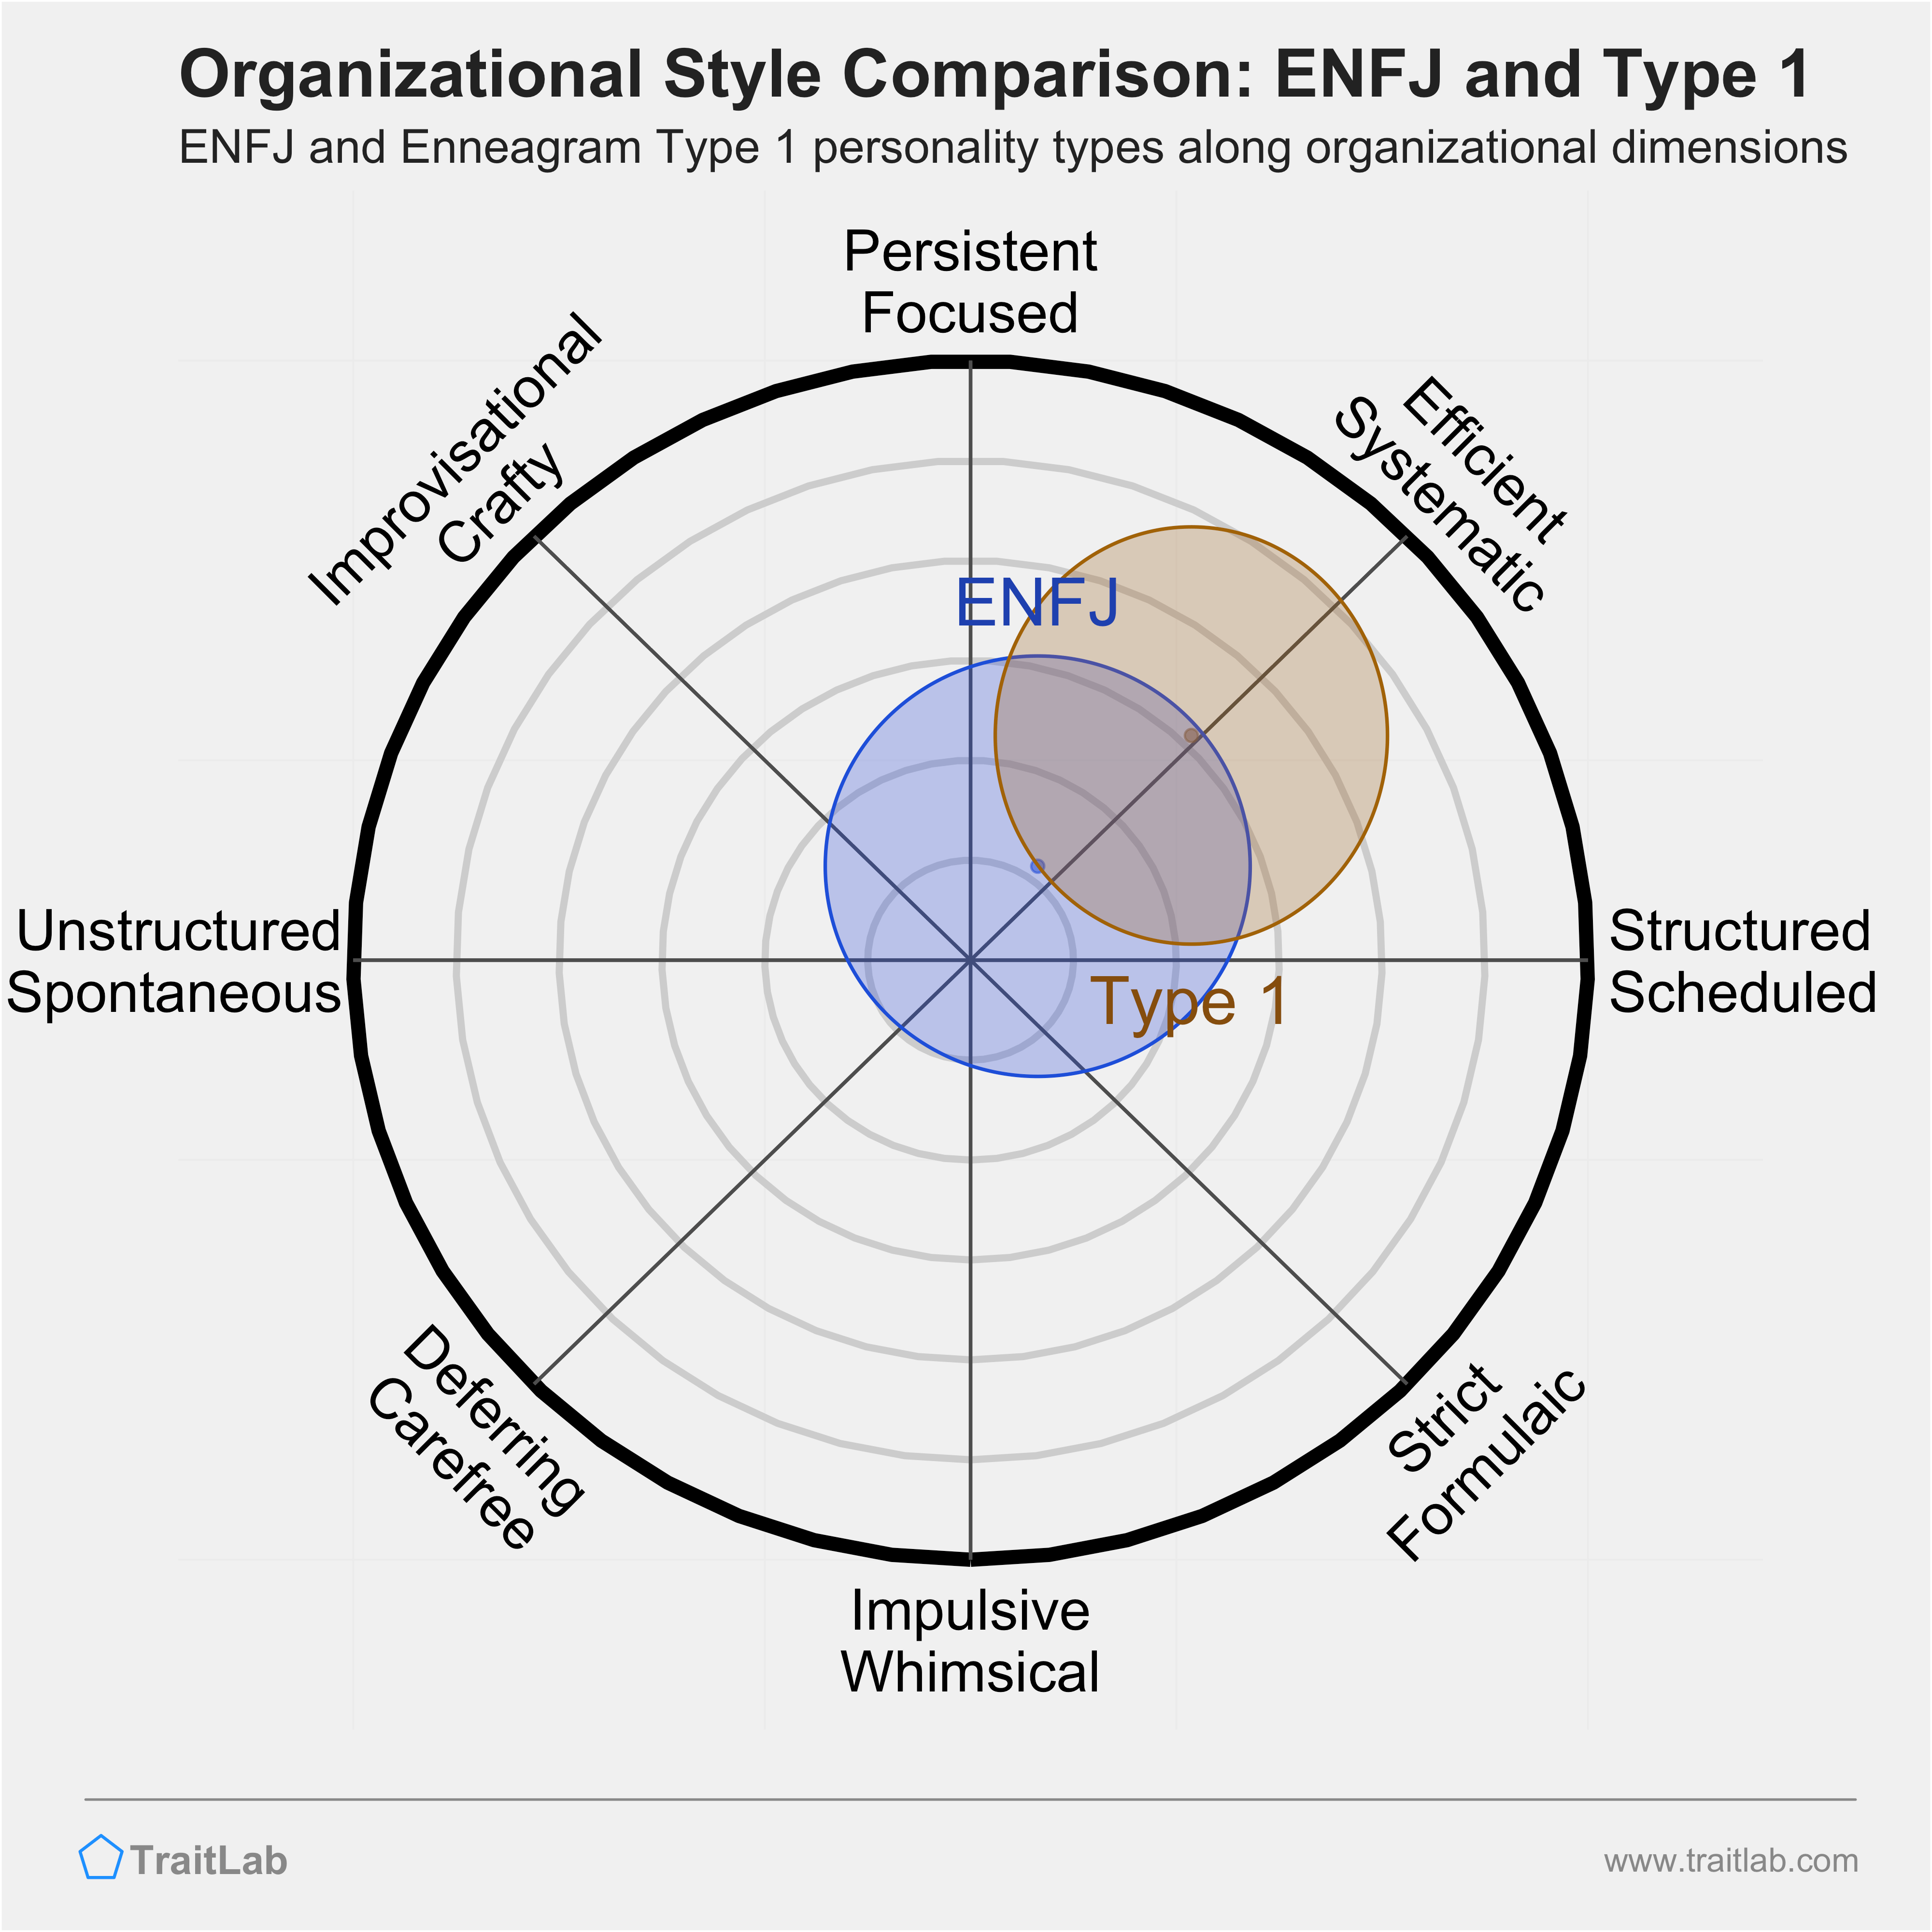 ENFJ and Type 1 comparison across organizational dimensions